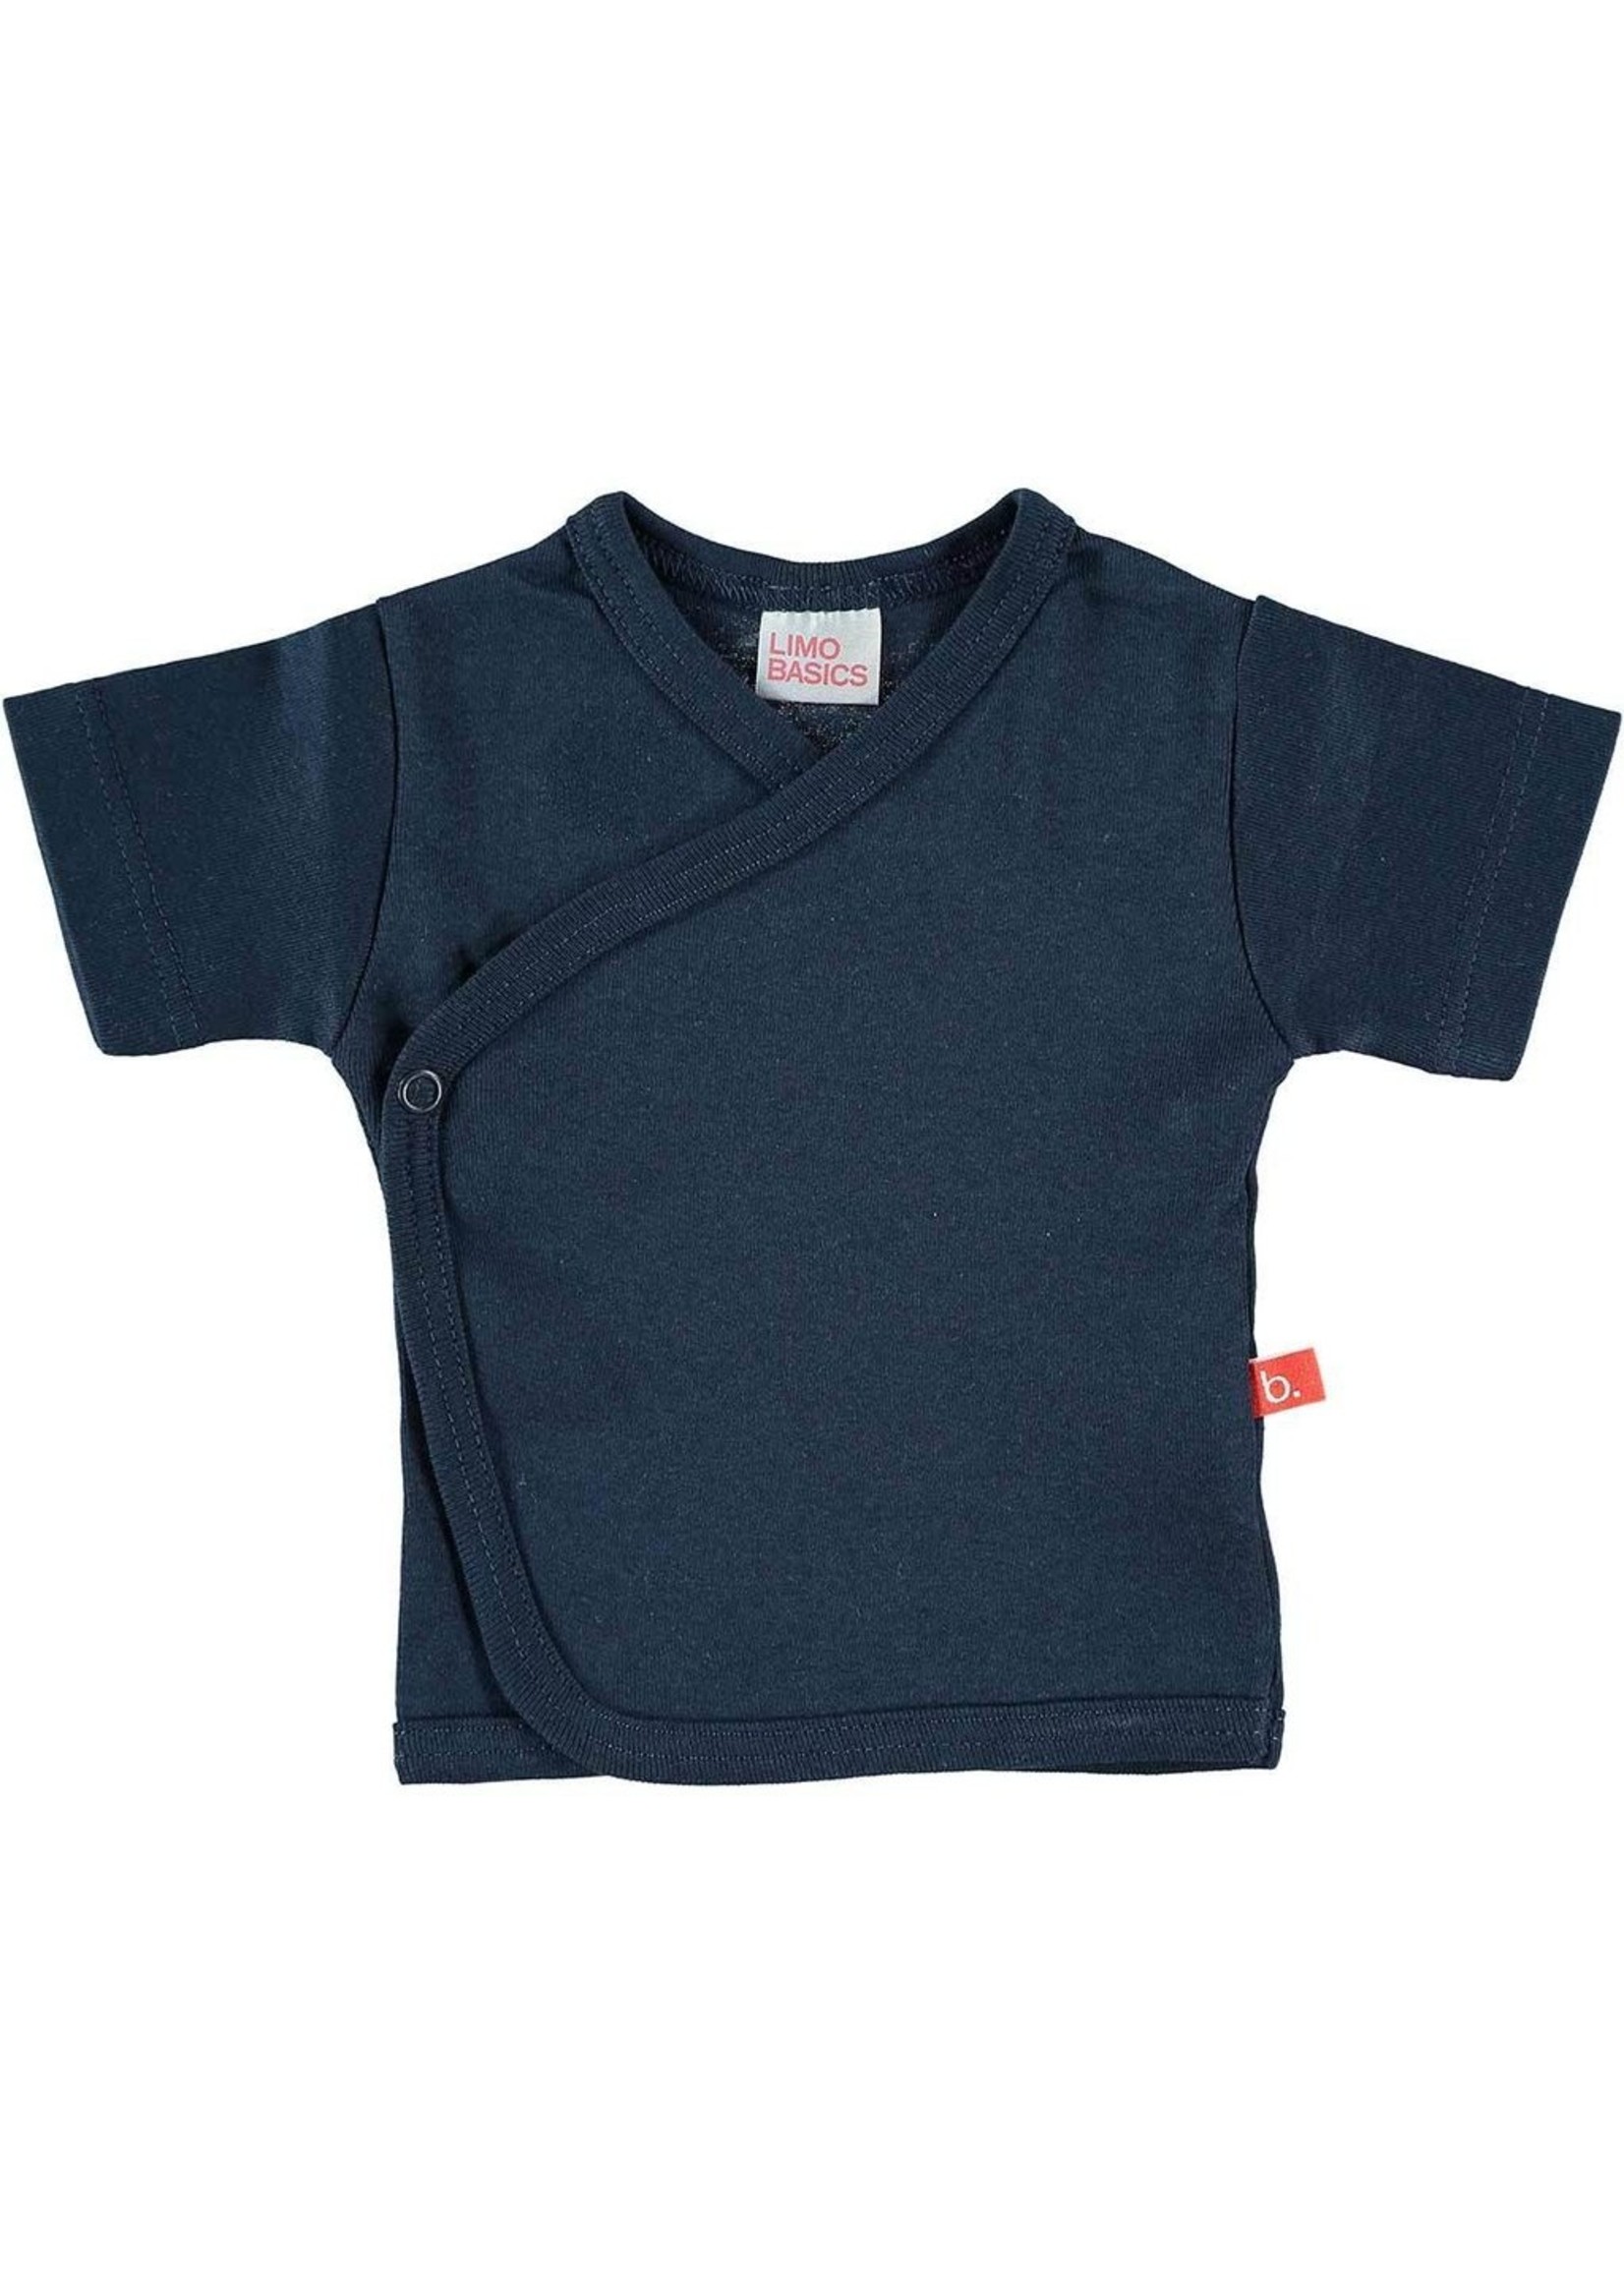 Limo basics T-shirt overslag bio katoen donkerblauw korte mouw 62-68